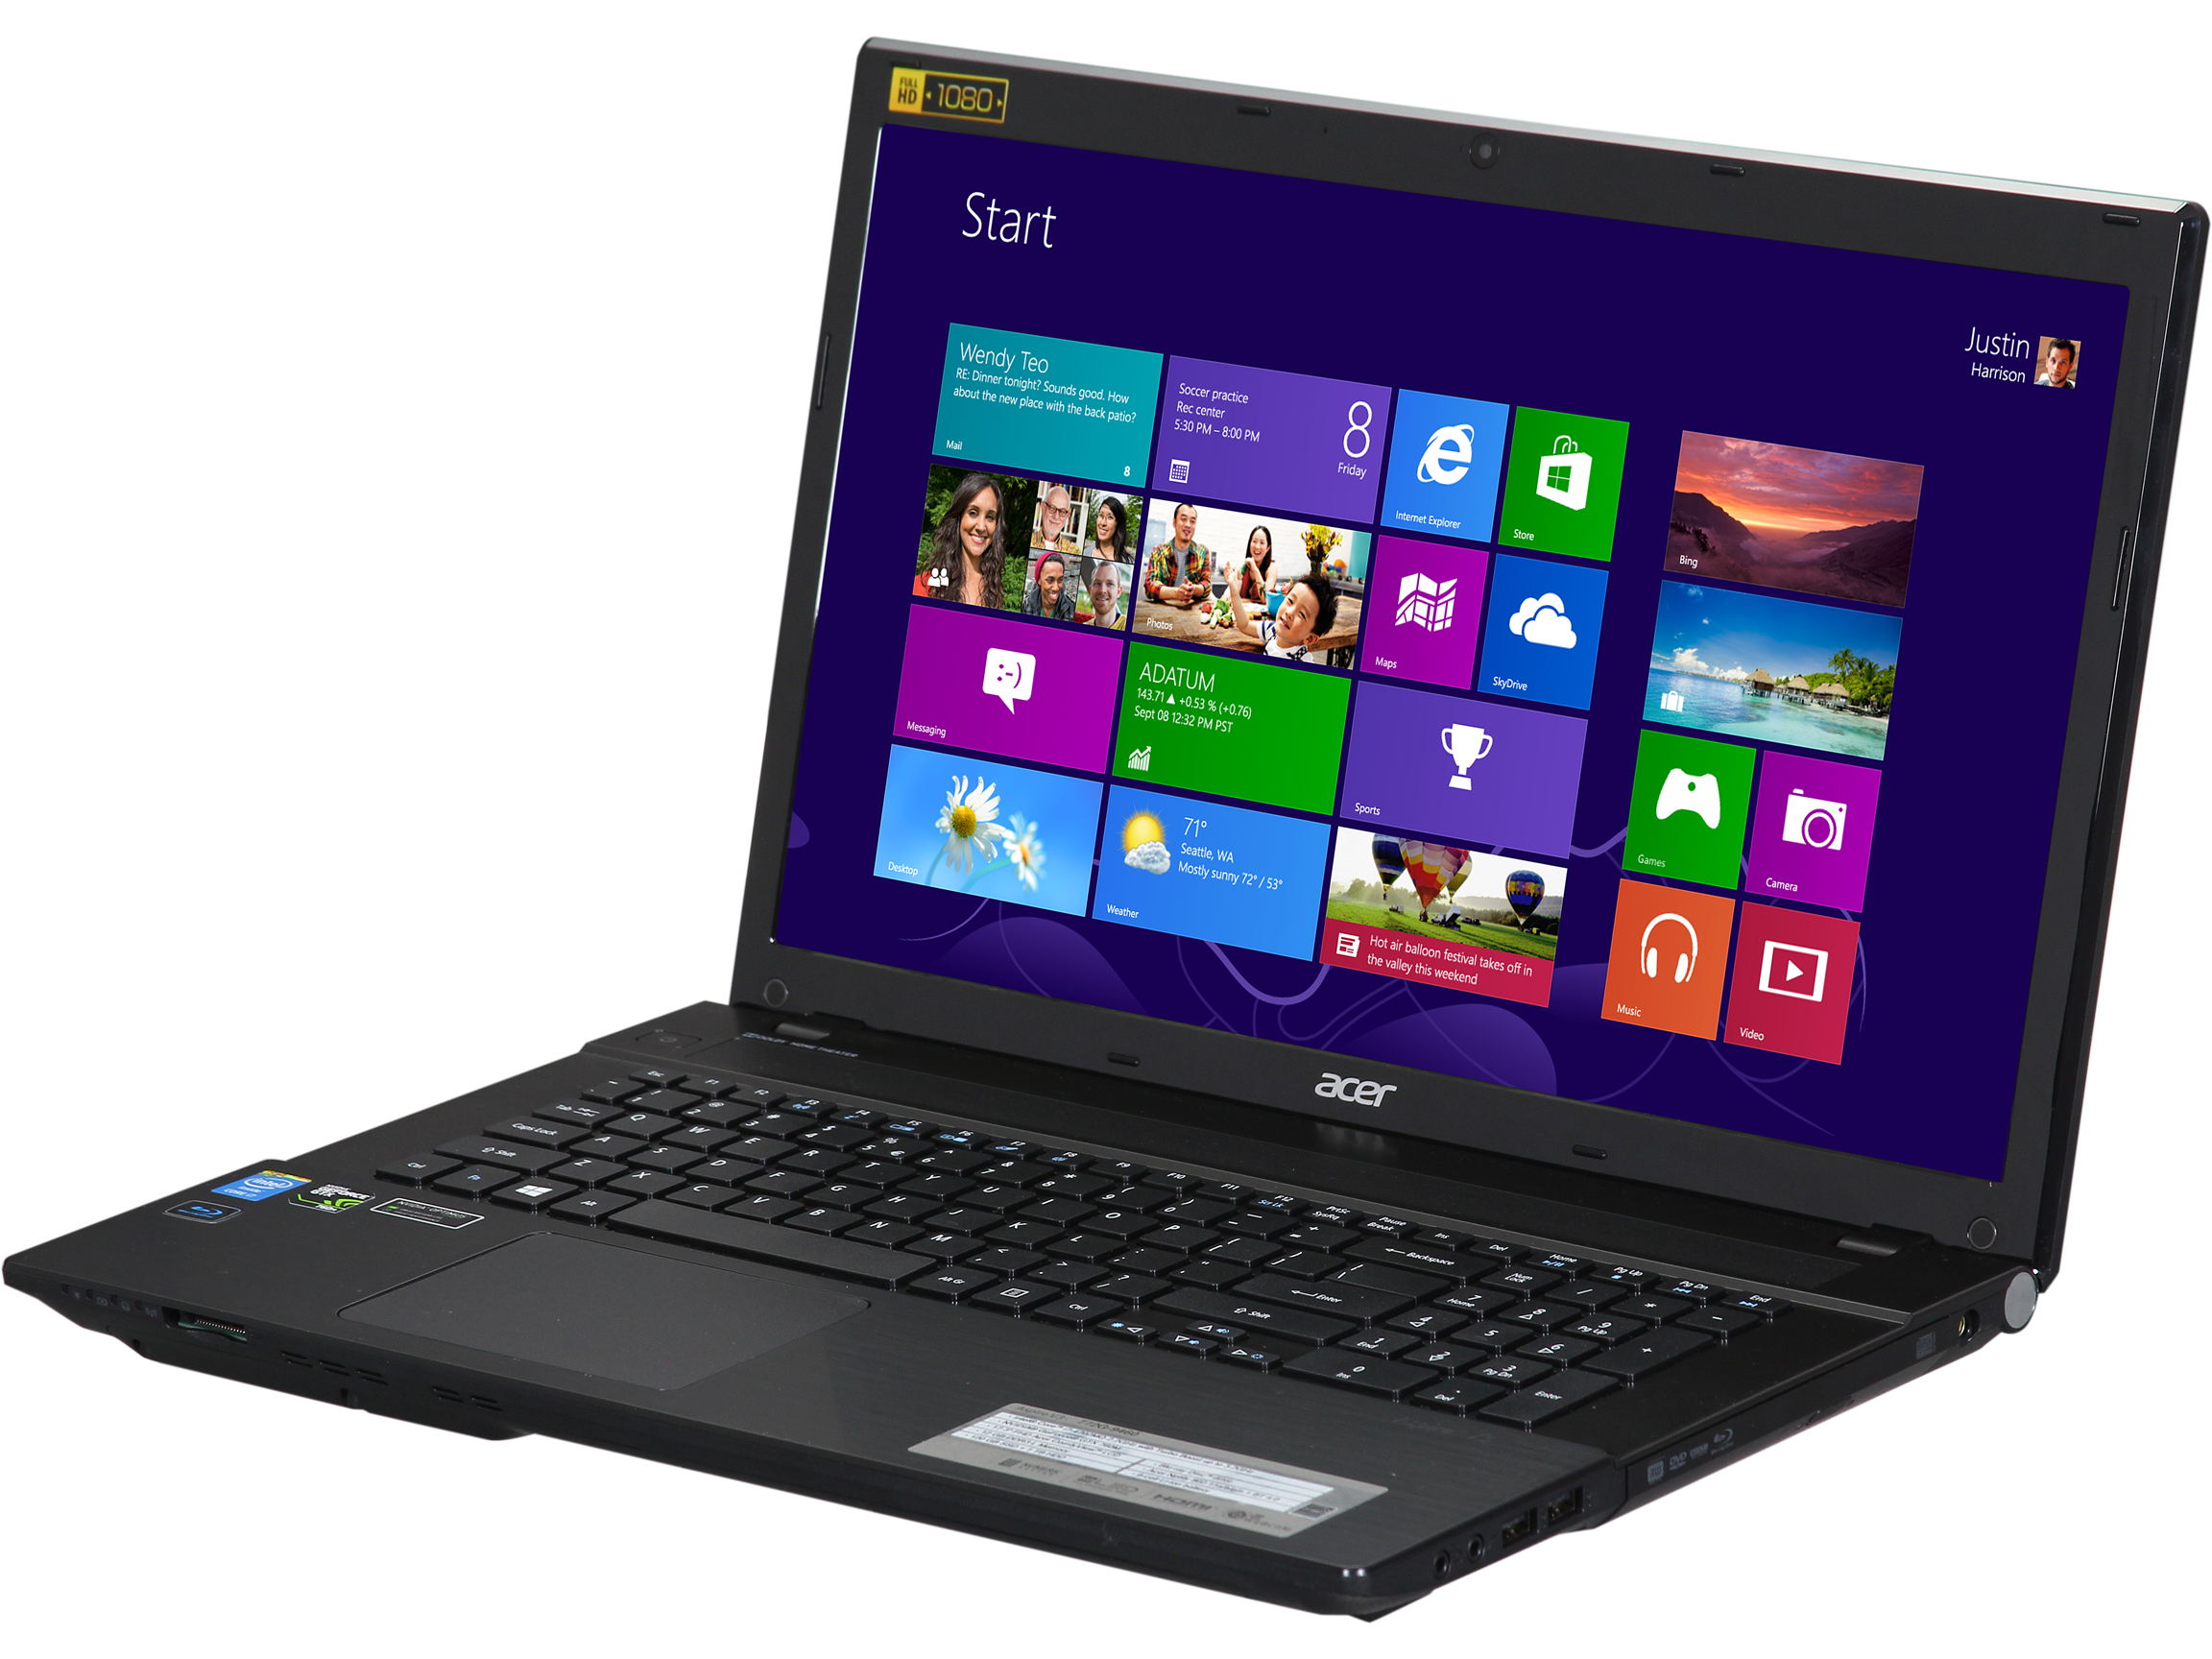 Refurbished Acer Aspire V3 772G 9460 Gaming Laptop 4th Generation Intel Core i7 4702MQ (2.20 GHz) 12 GB Memory 1 TB HDD 120 GB SSD NVIDIA GeForce GTX 760M 2GB GDDR5 17.3" Windows 8 64 Bit